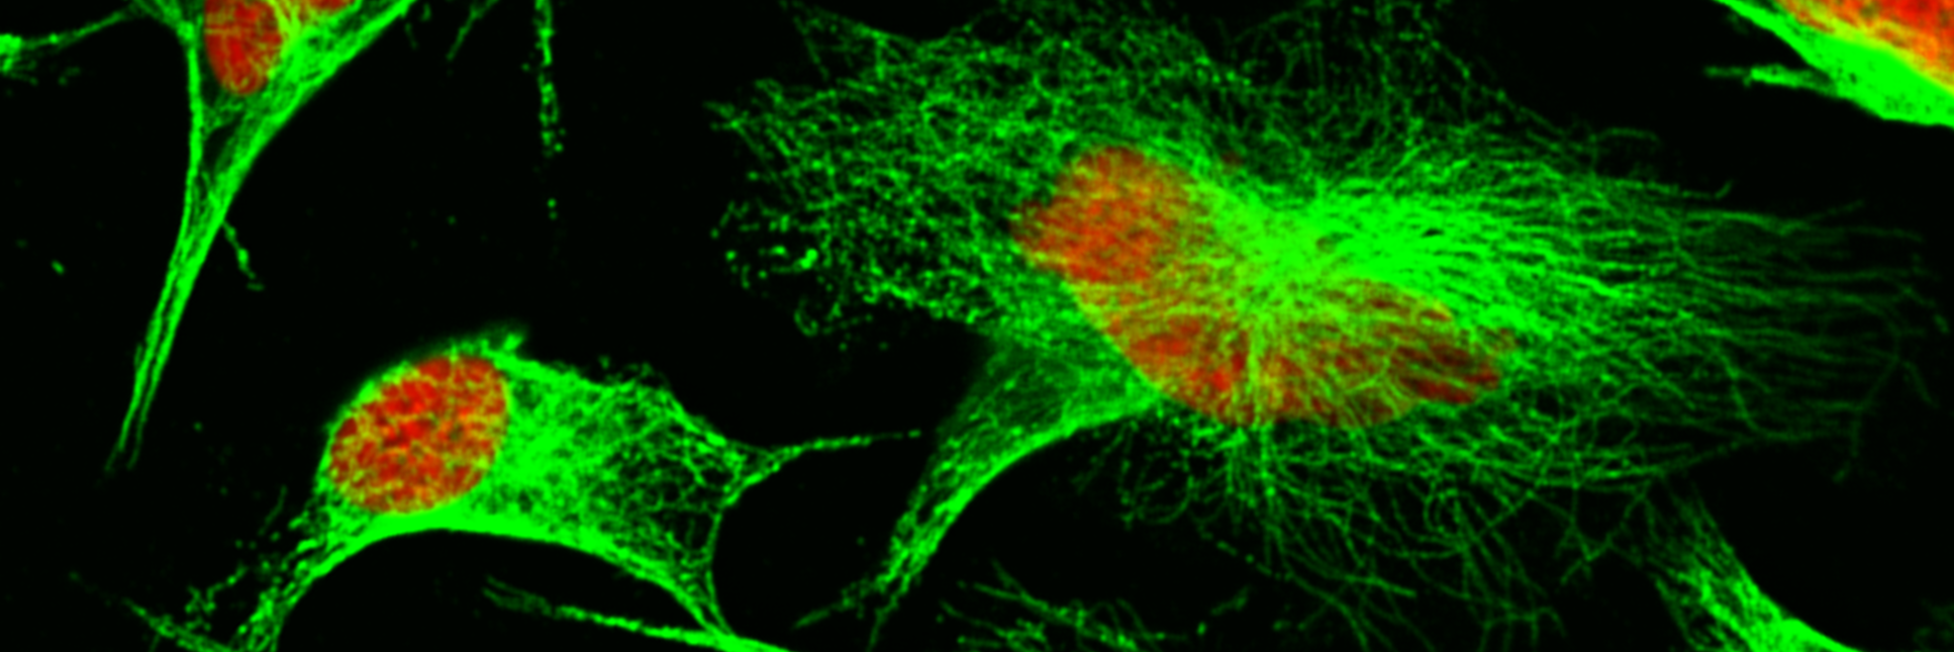 tubulin network in neuroblastoma cells